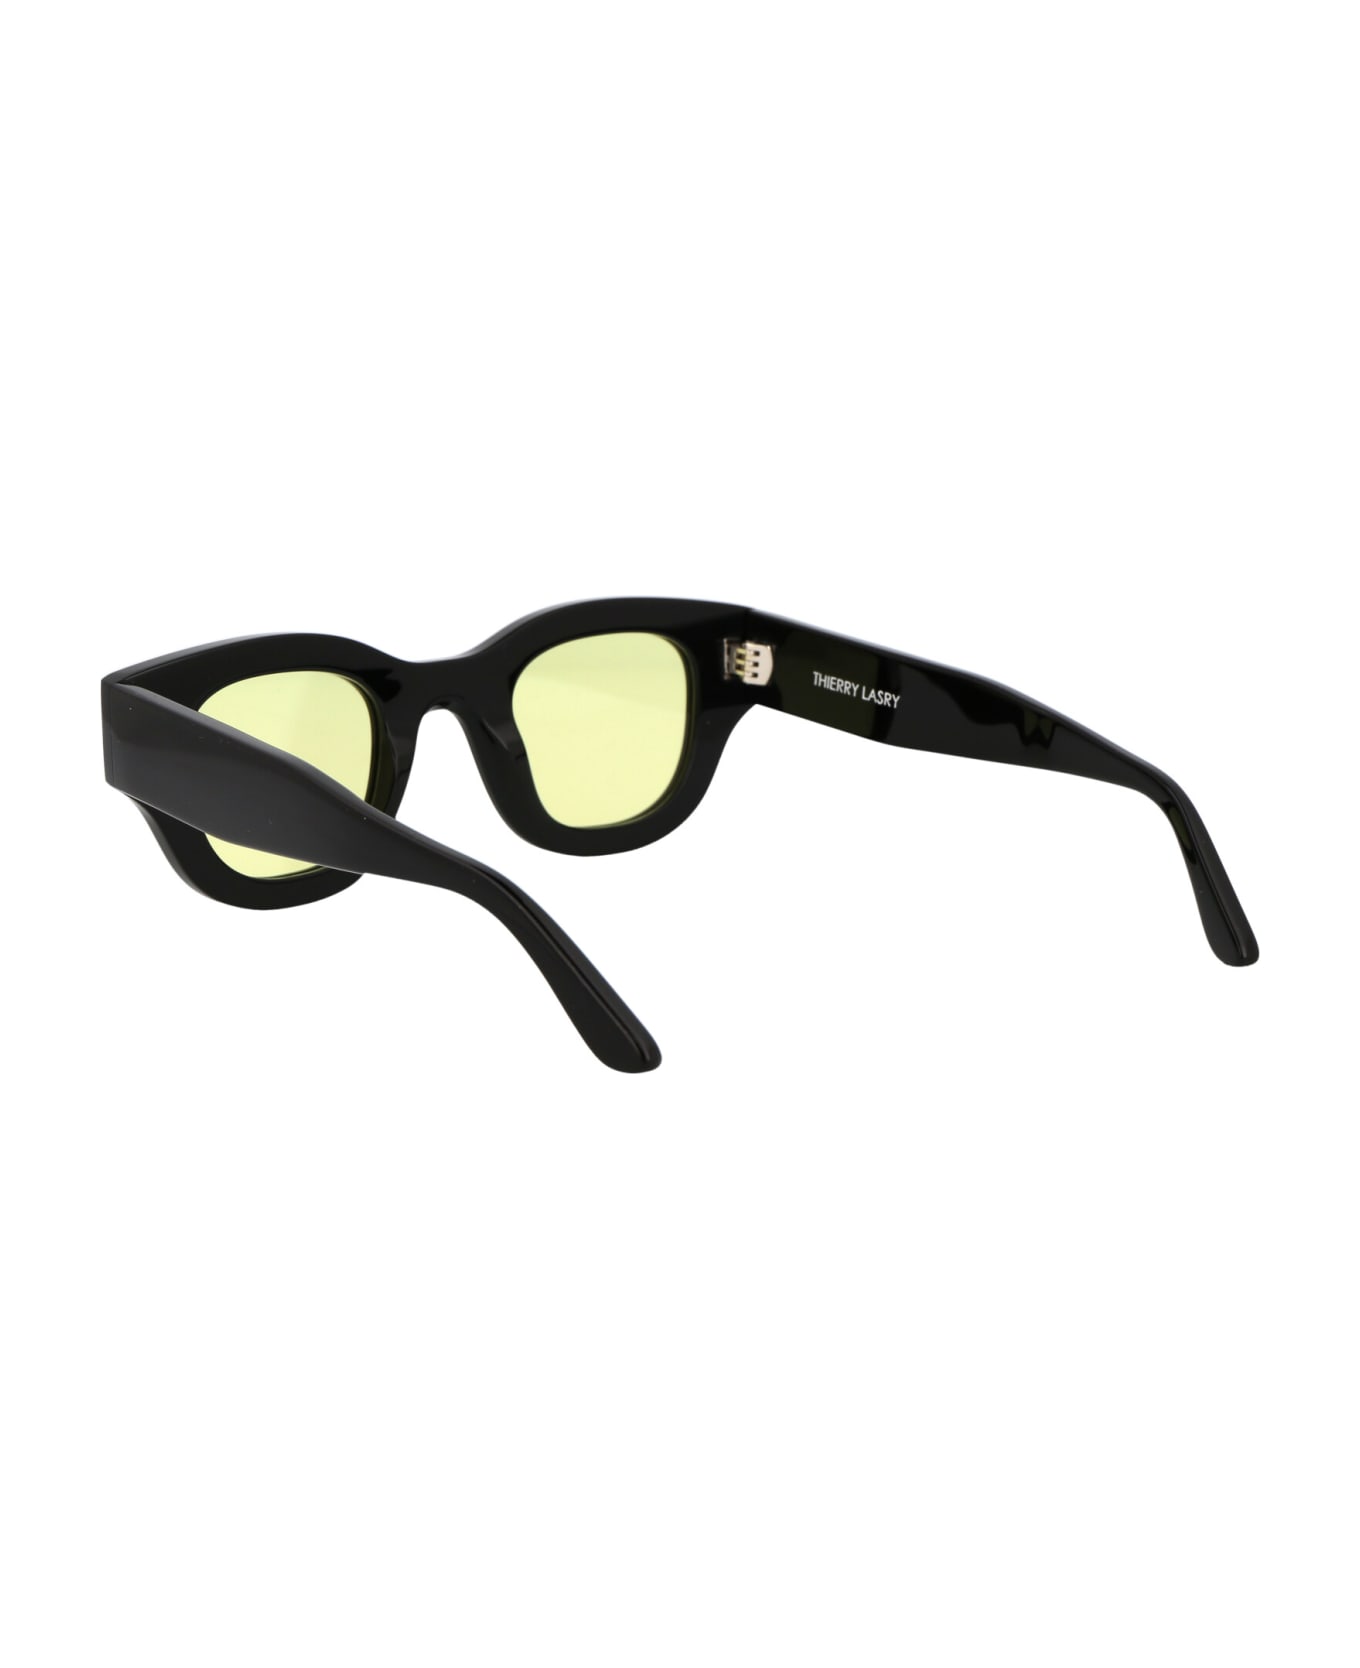 Thierry Lasry Autocracy Sunglasses - 101 YELLOW サングラス